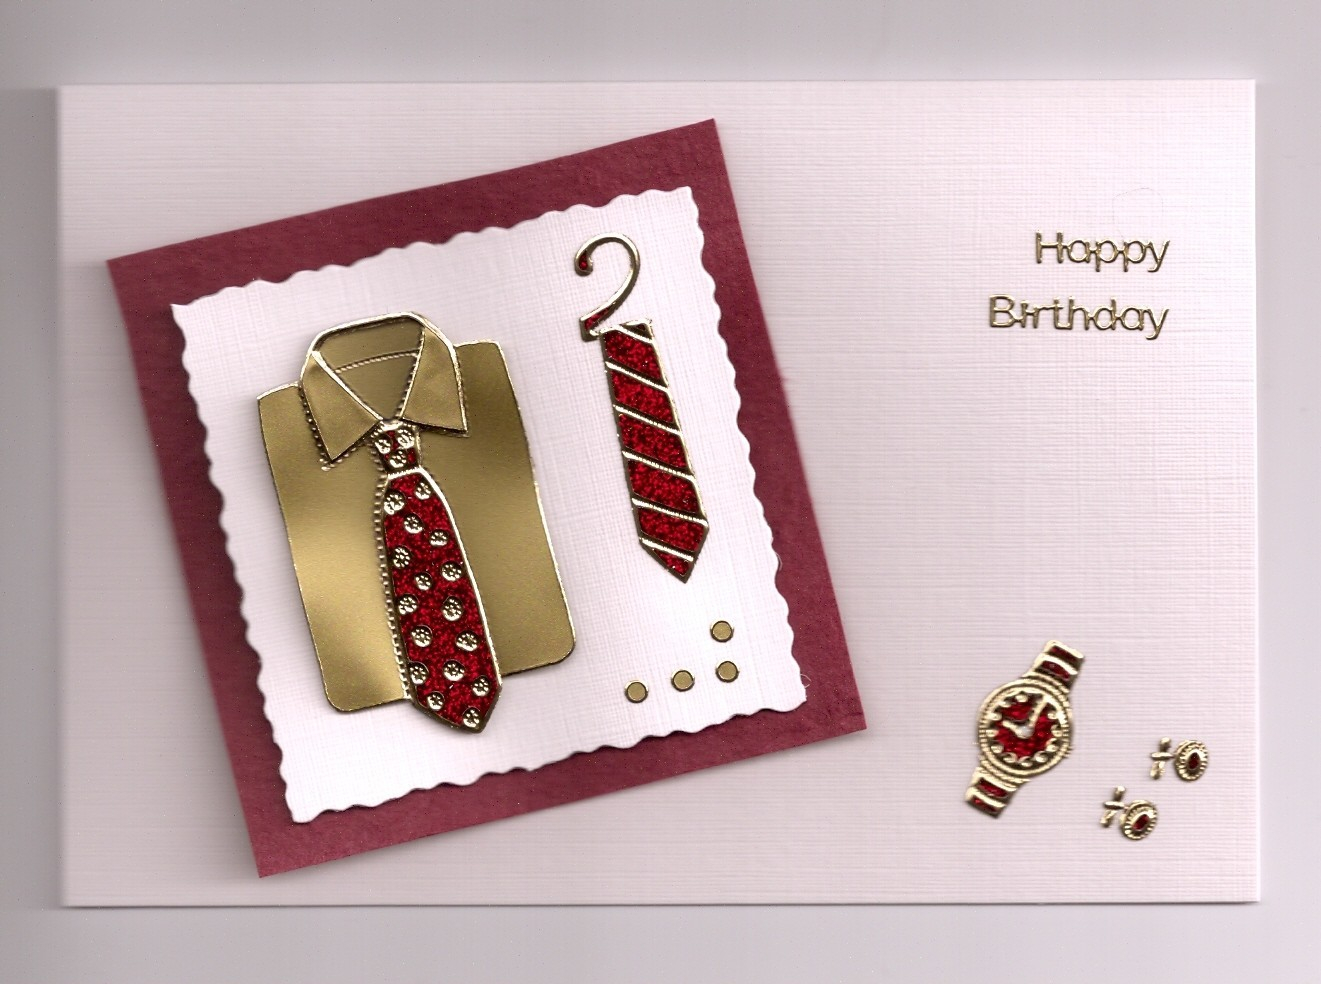 Handmade Birthday Cards For Men Ideas Handmade Birthday Cards For Men Lets Celebrate